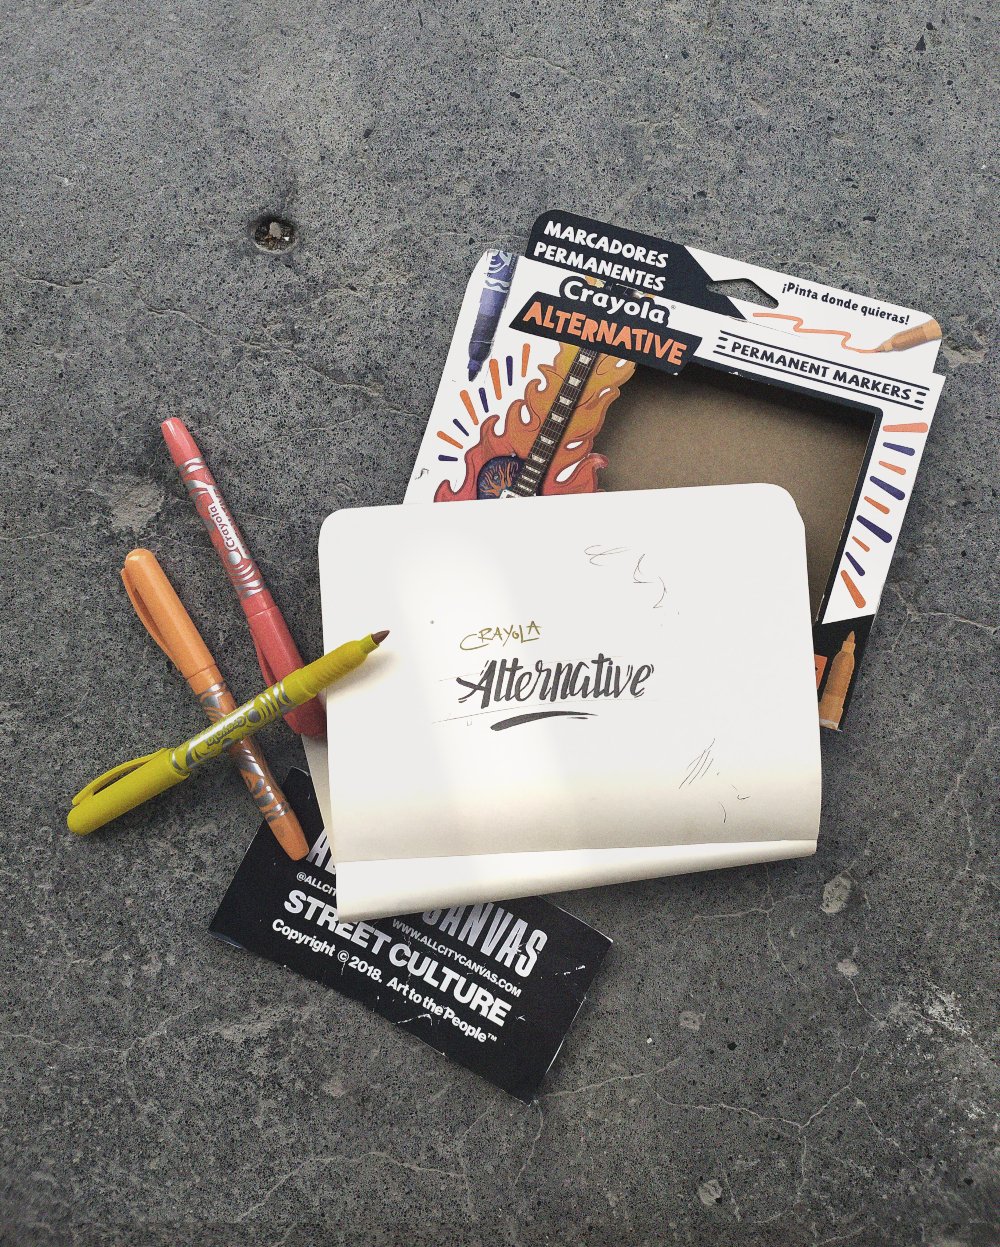 mercadores permanentes Crayola Alternative para hacer street art